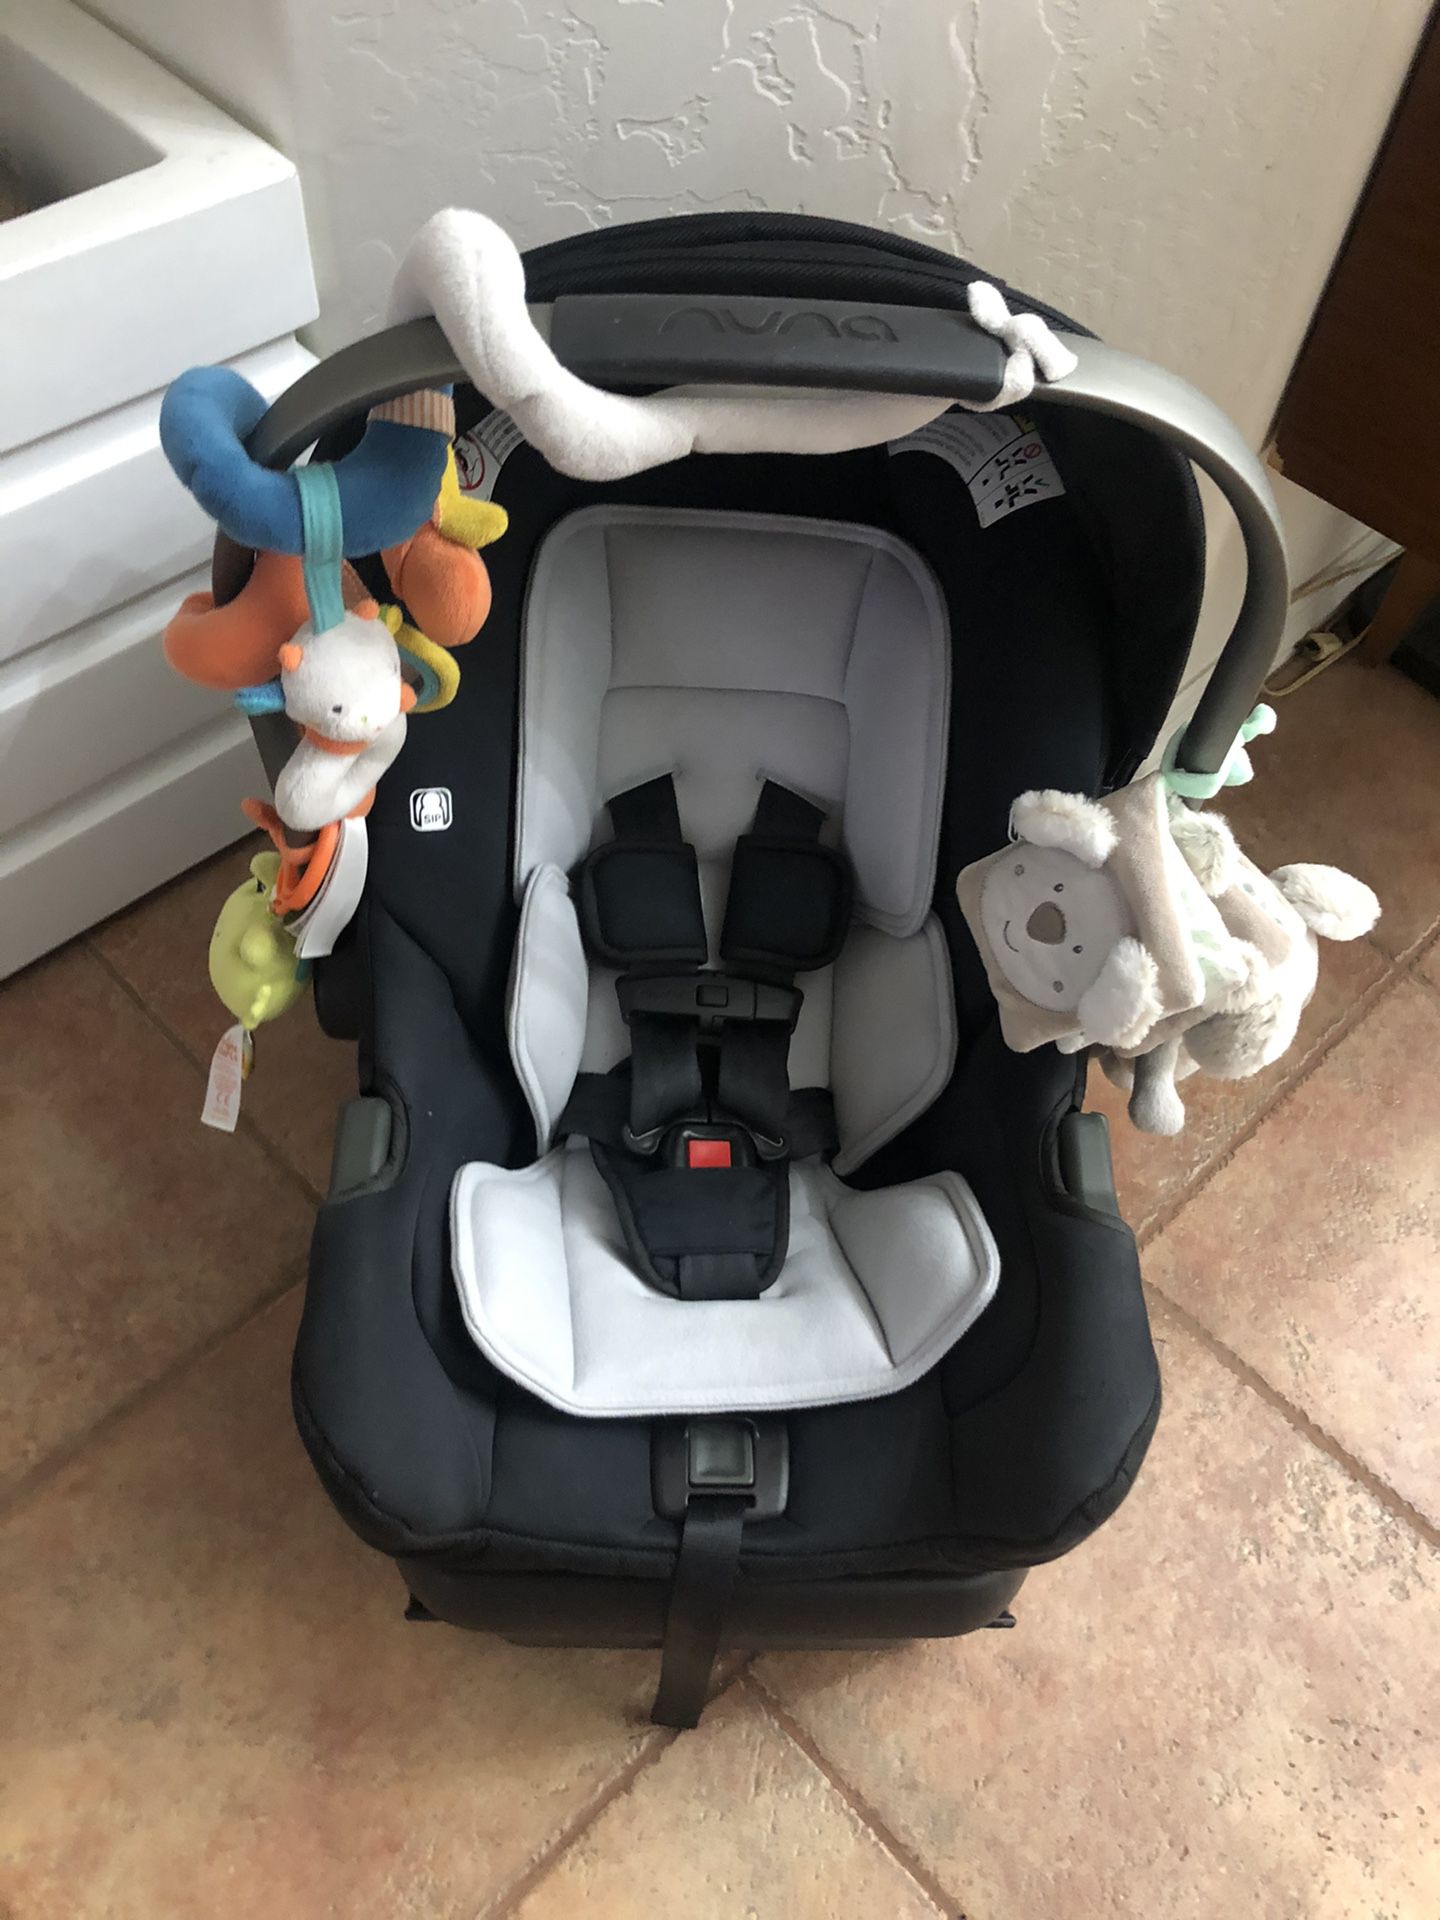 Nuna baby pipa car seat $120